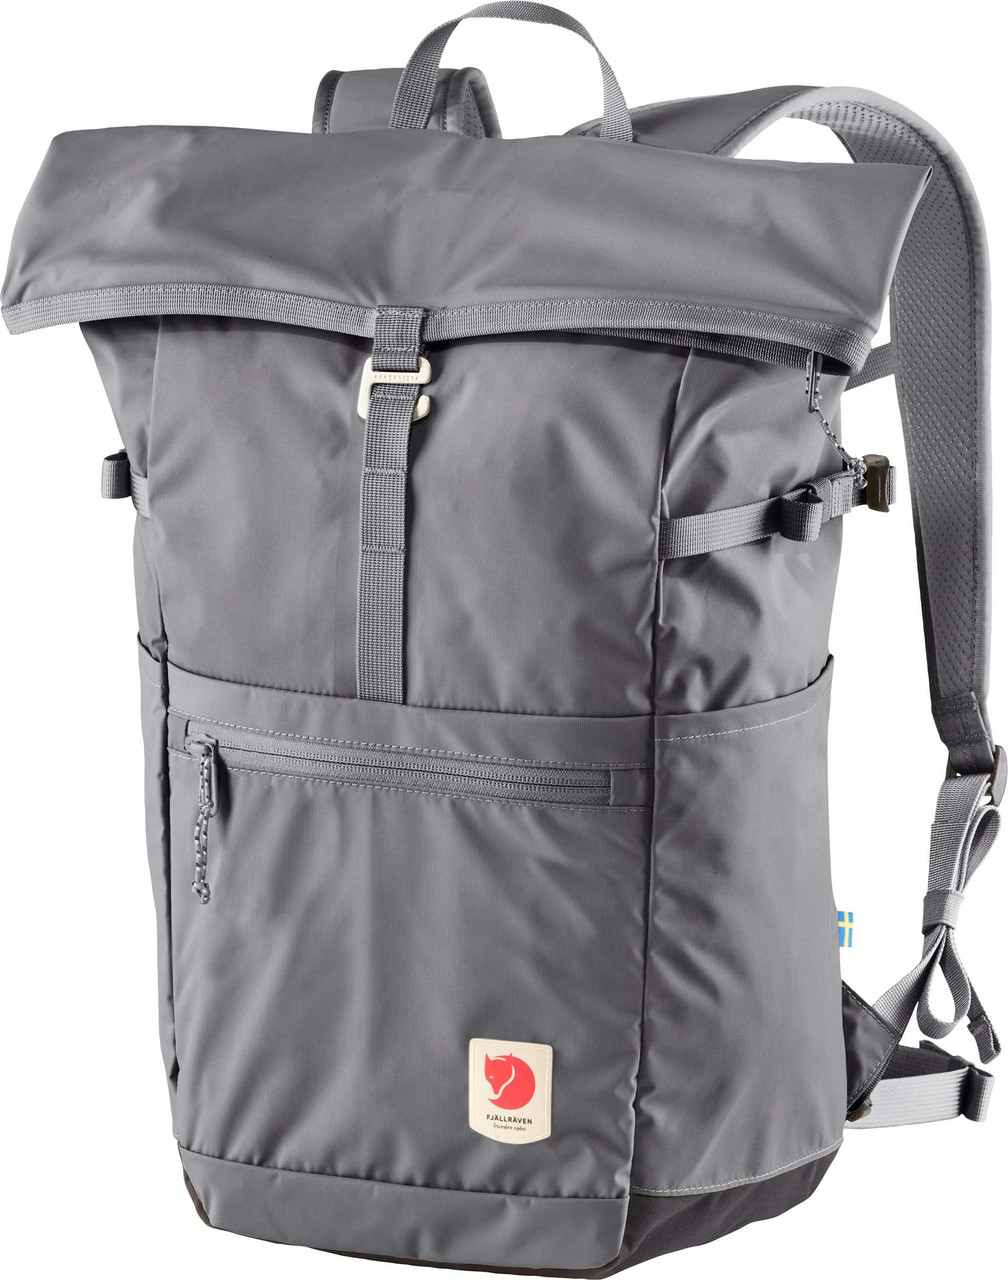 High Coast Foldsack 24 Backpack Shark Grey